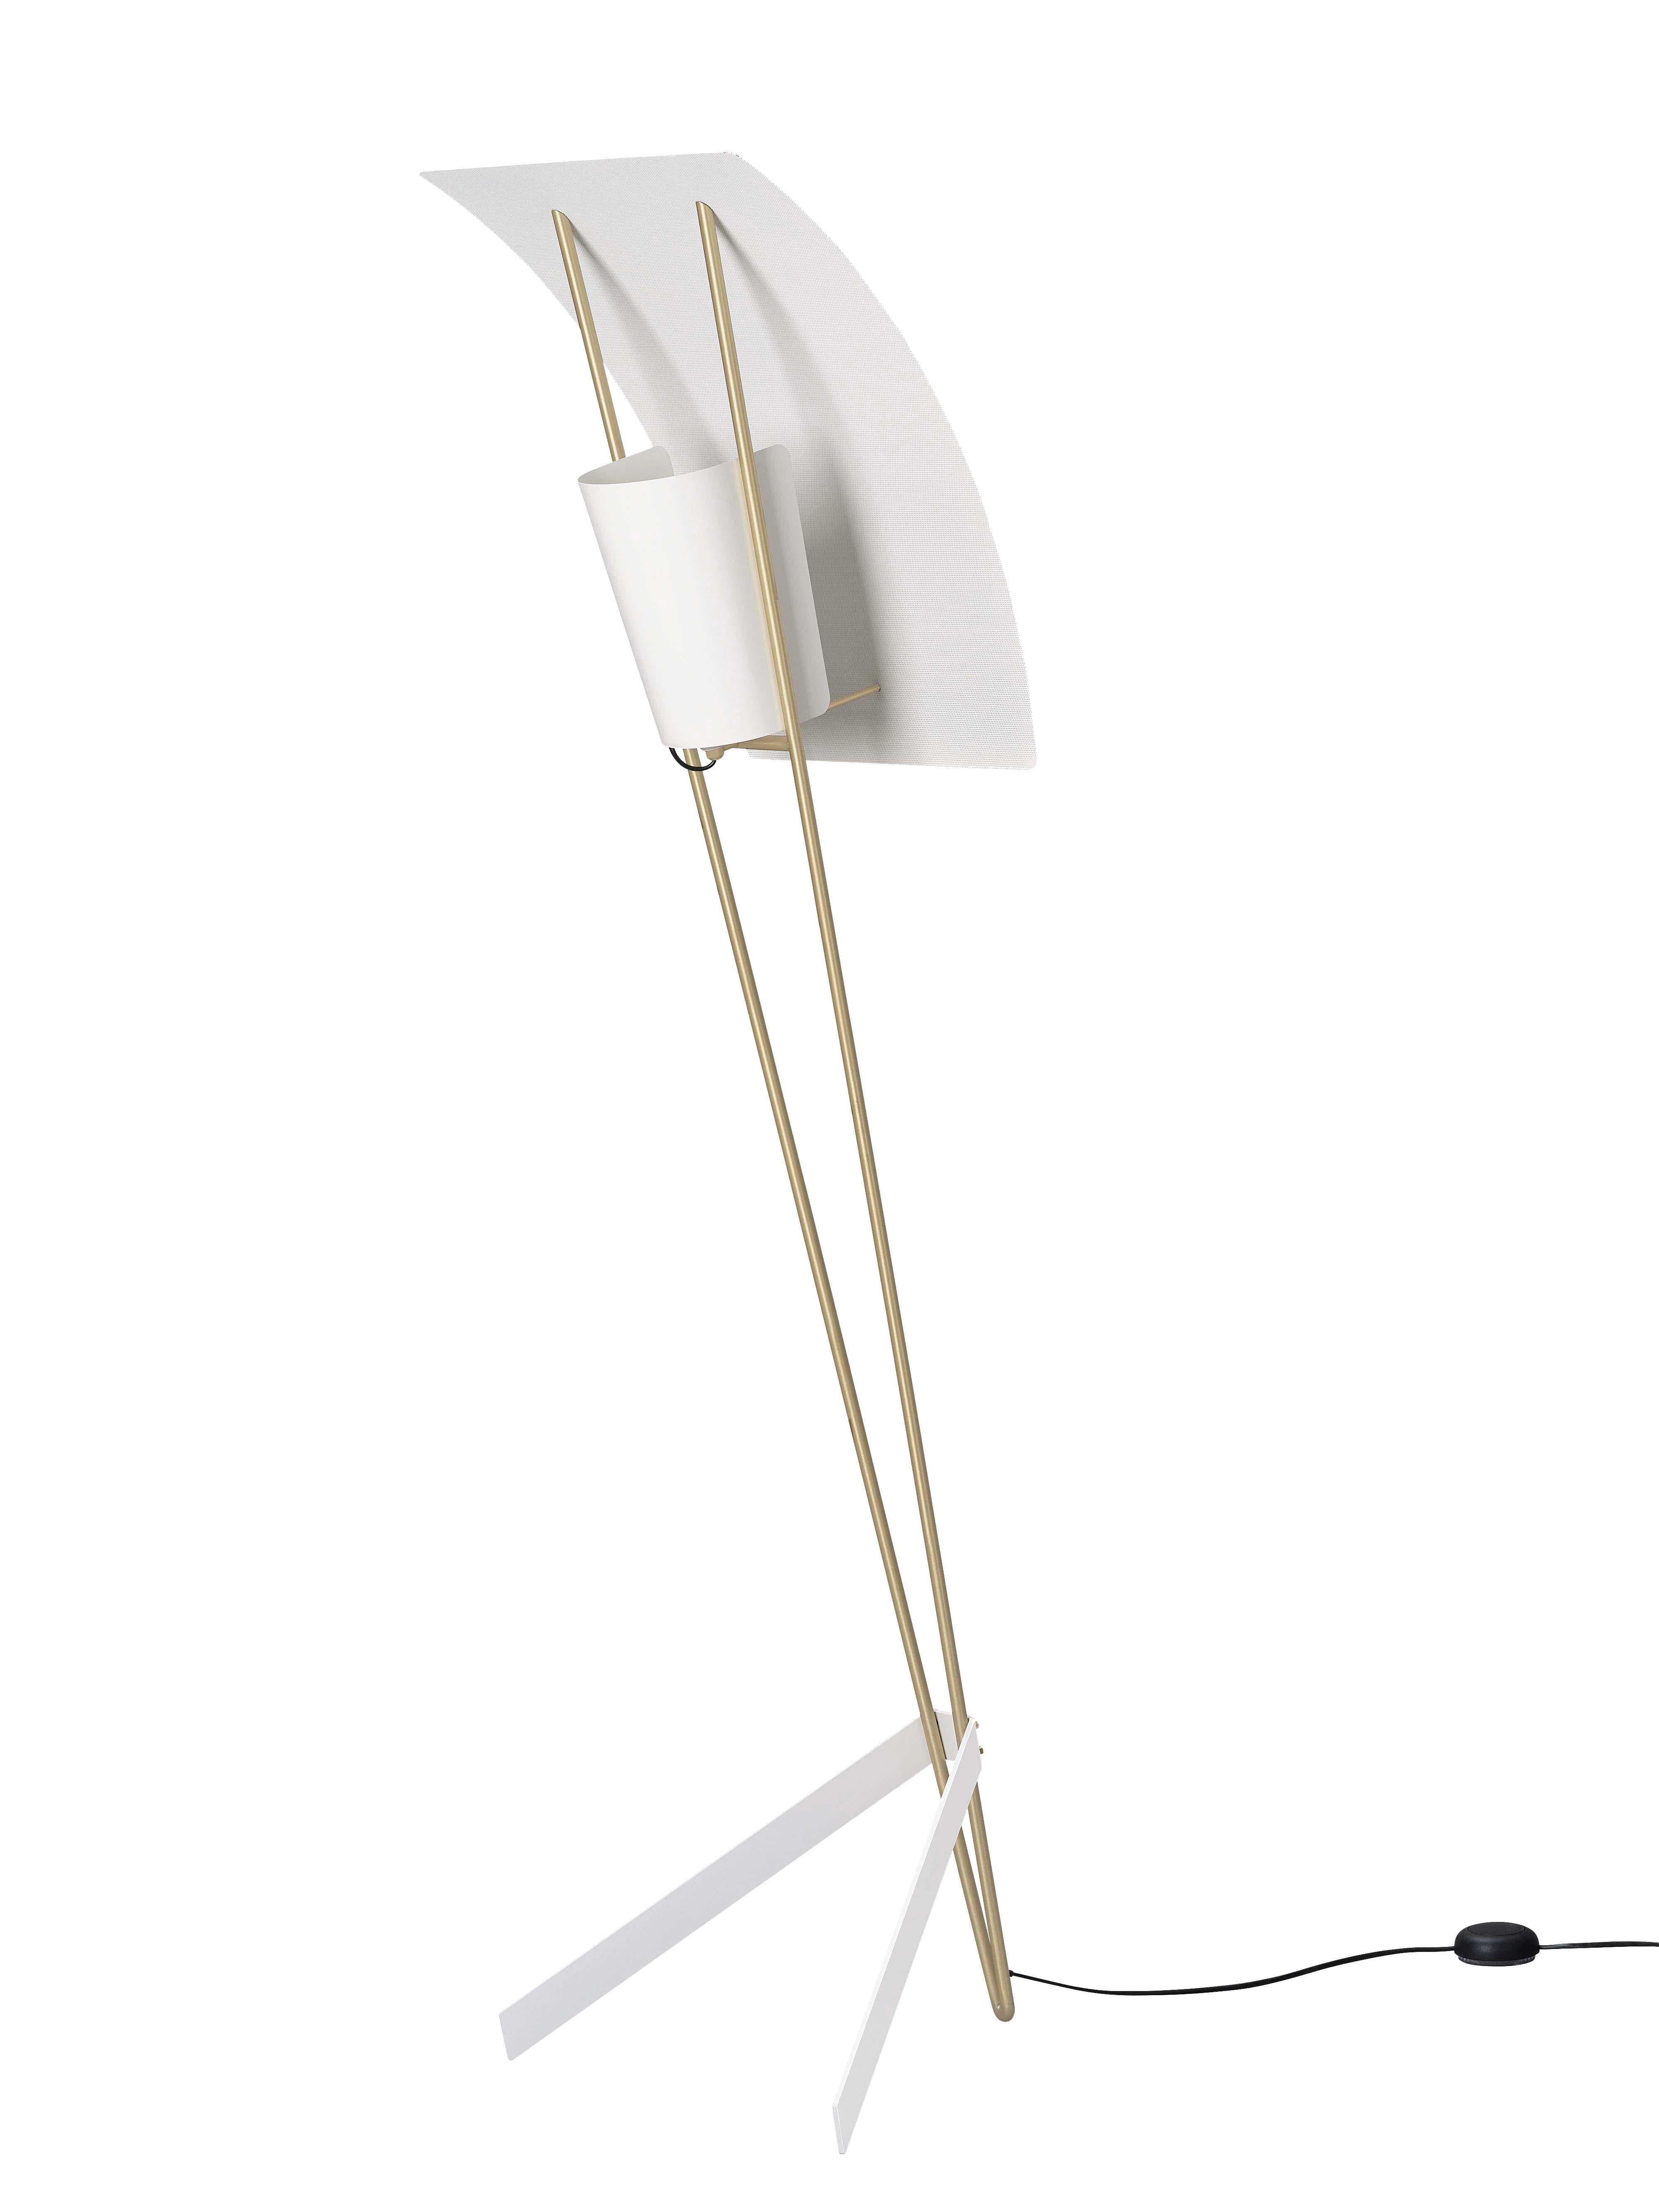 Pierre Guariche Kite Floor Lamp in Black and White for Sammode Studio For Sale 5